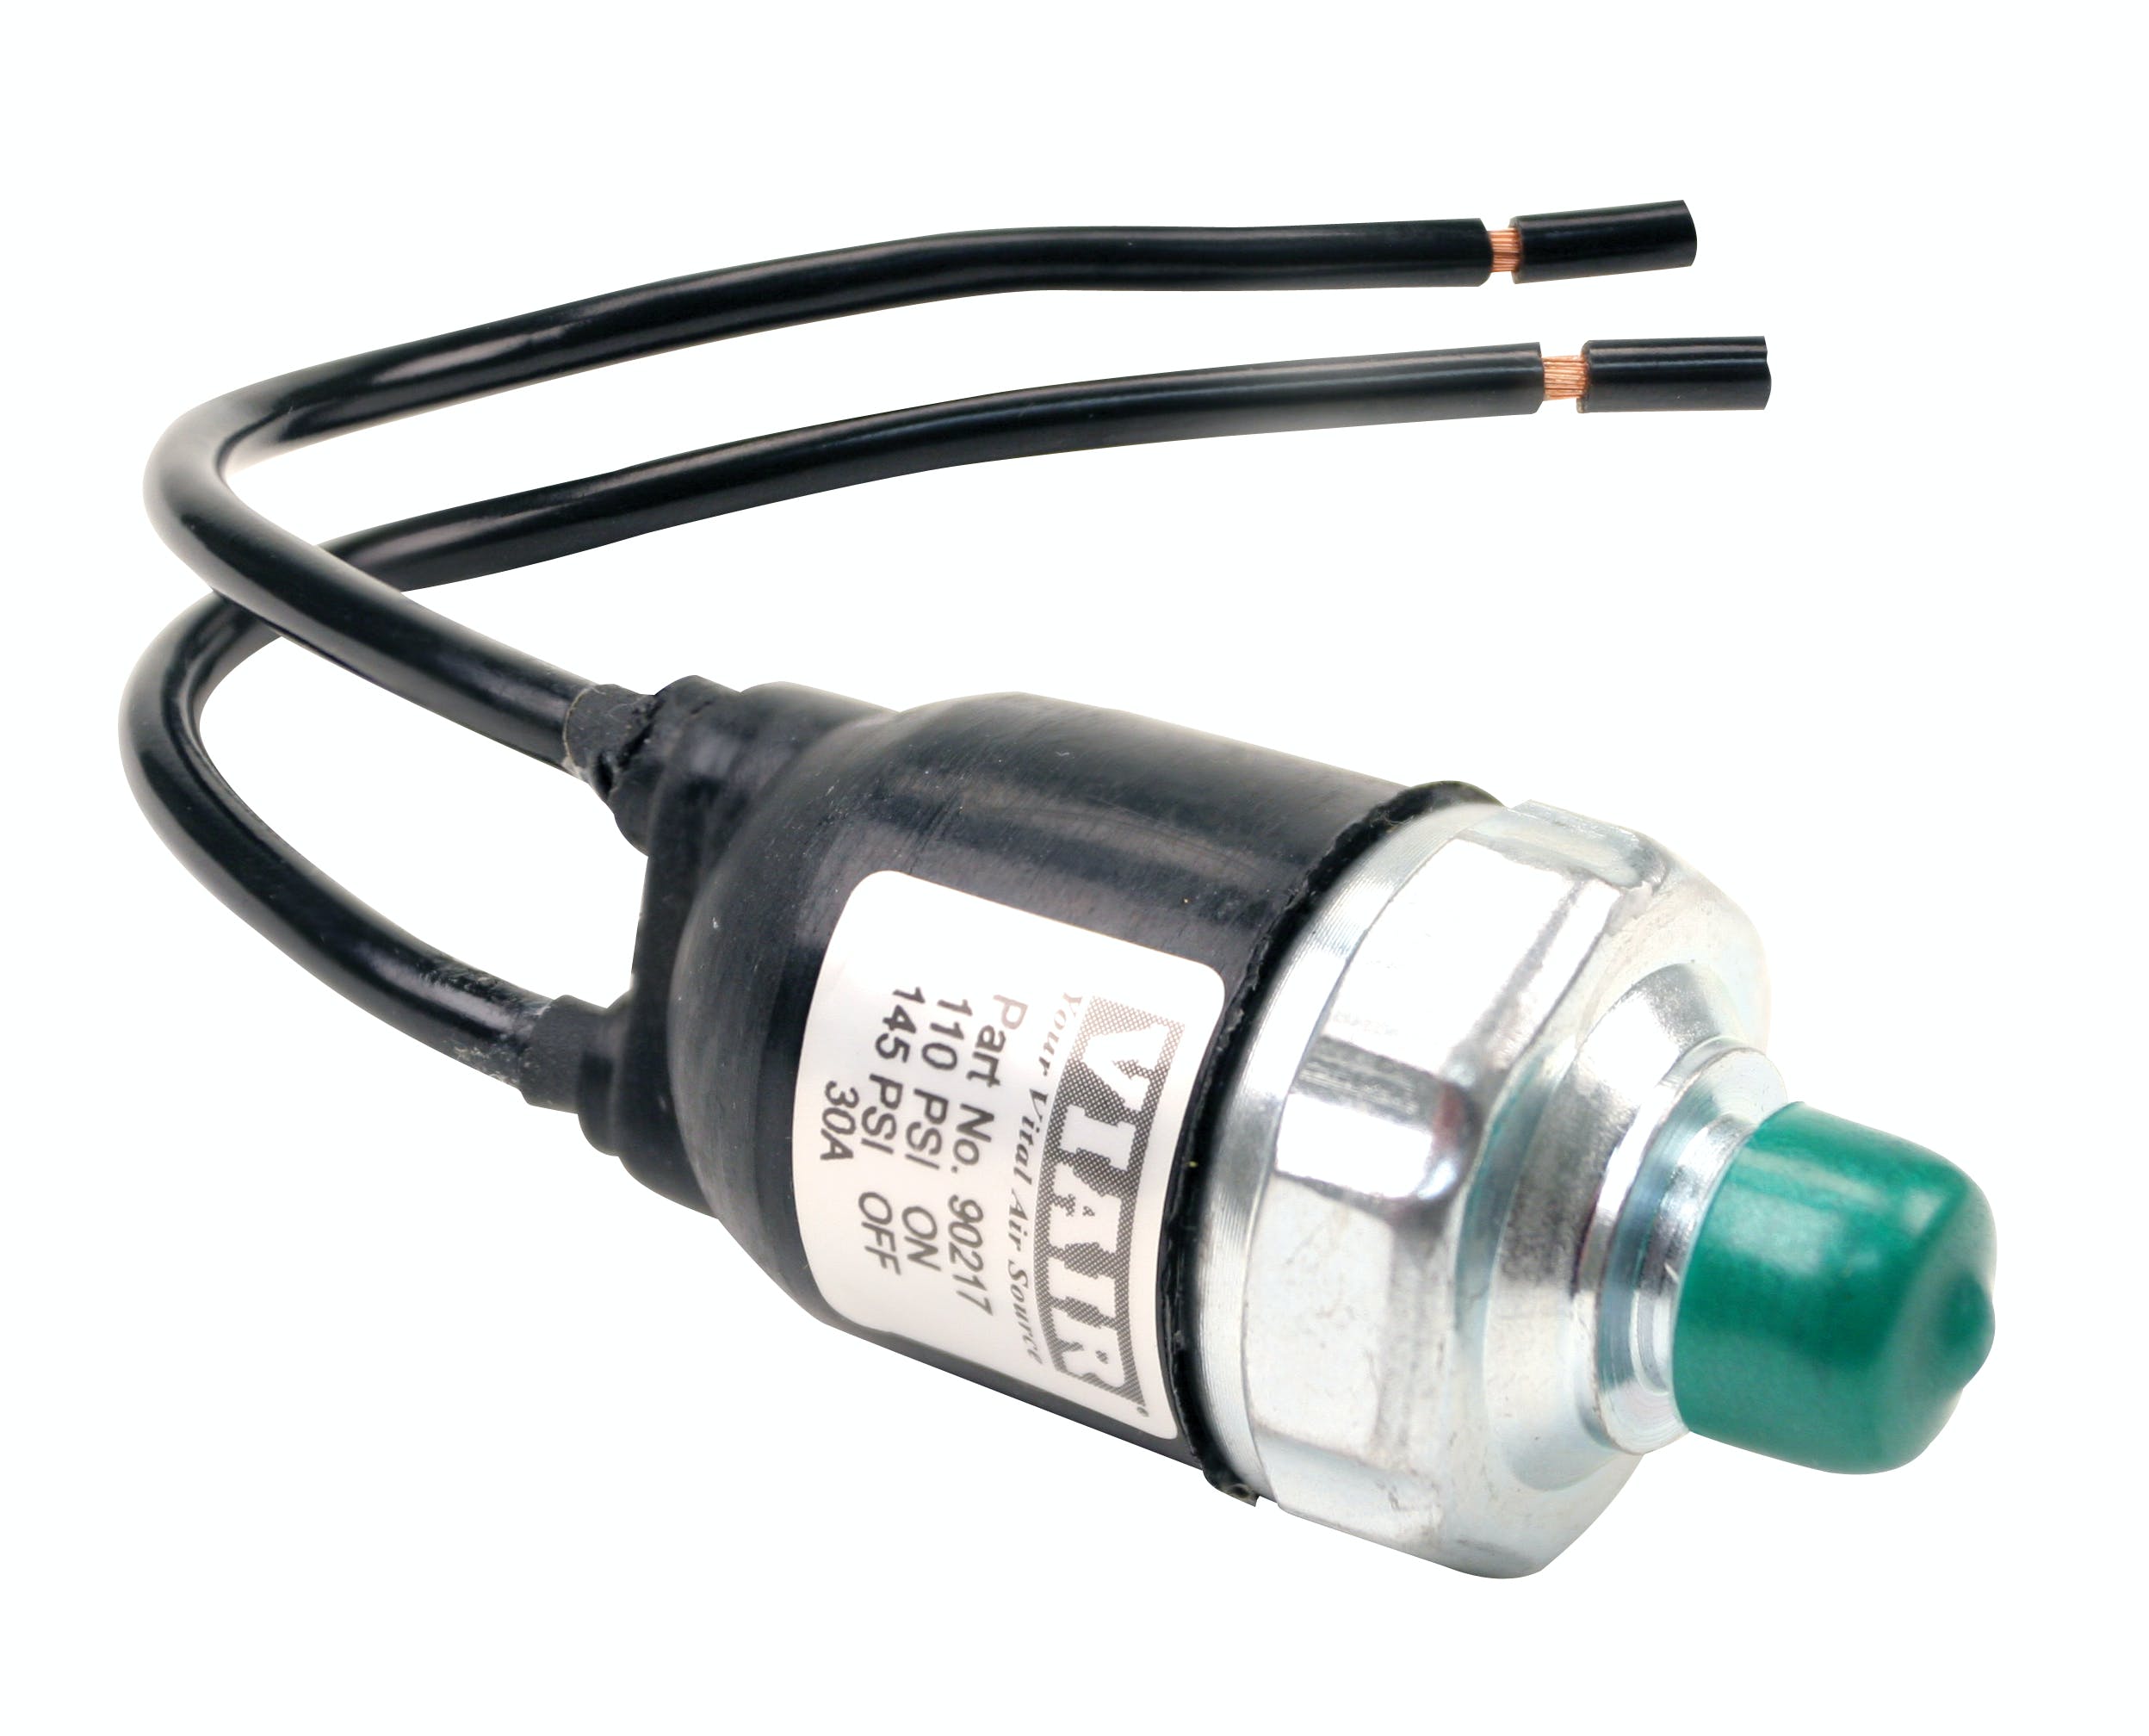 VIAIR 90218 Sealed Pressure Switch  1/8in M NPT Port  16 GA Lead Wires  140 psi On  175